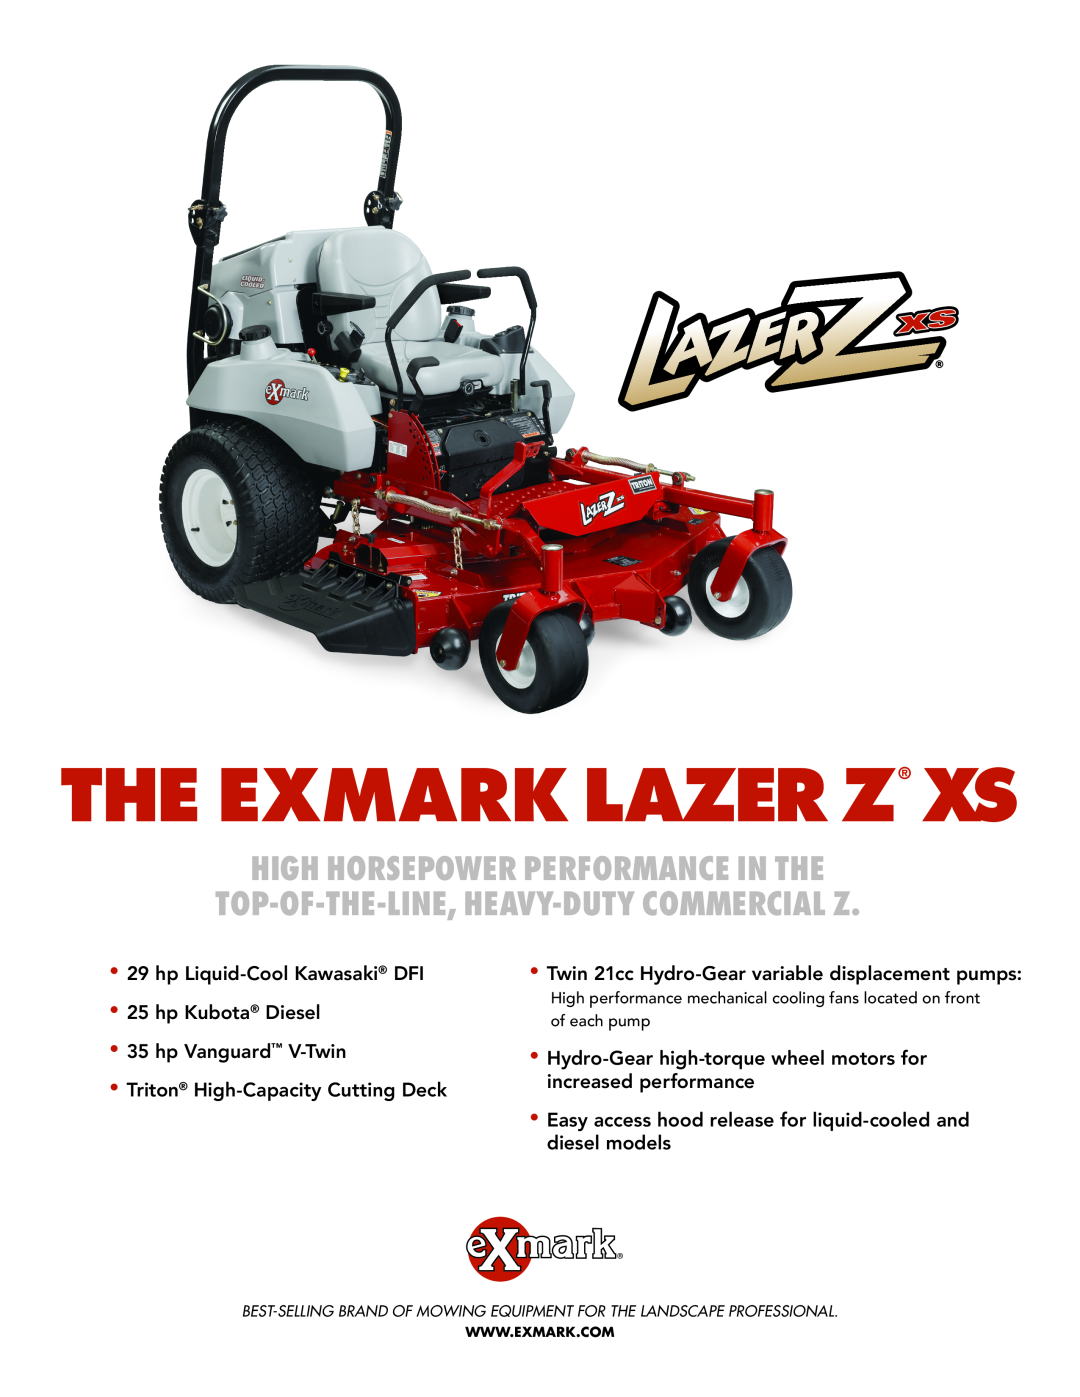 Exmark lXs35bv725, lXs29lKa725, lXs35bv605, lXs25Kd605 manual The Exmark Lazer Z Xs, High horsepower performance in the 